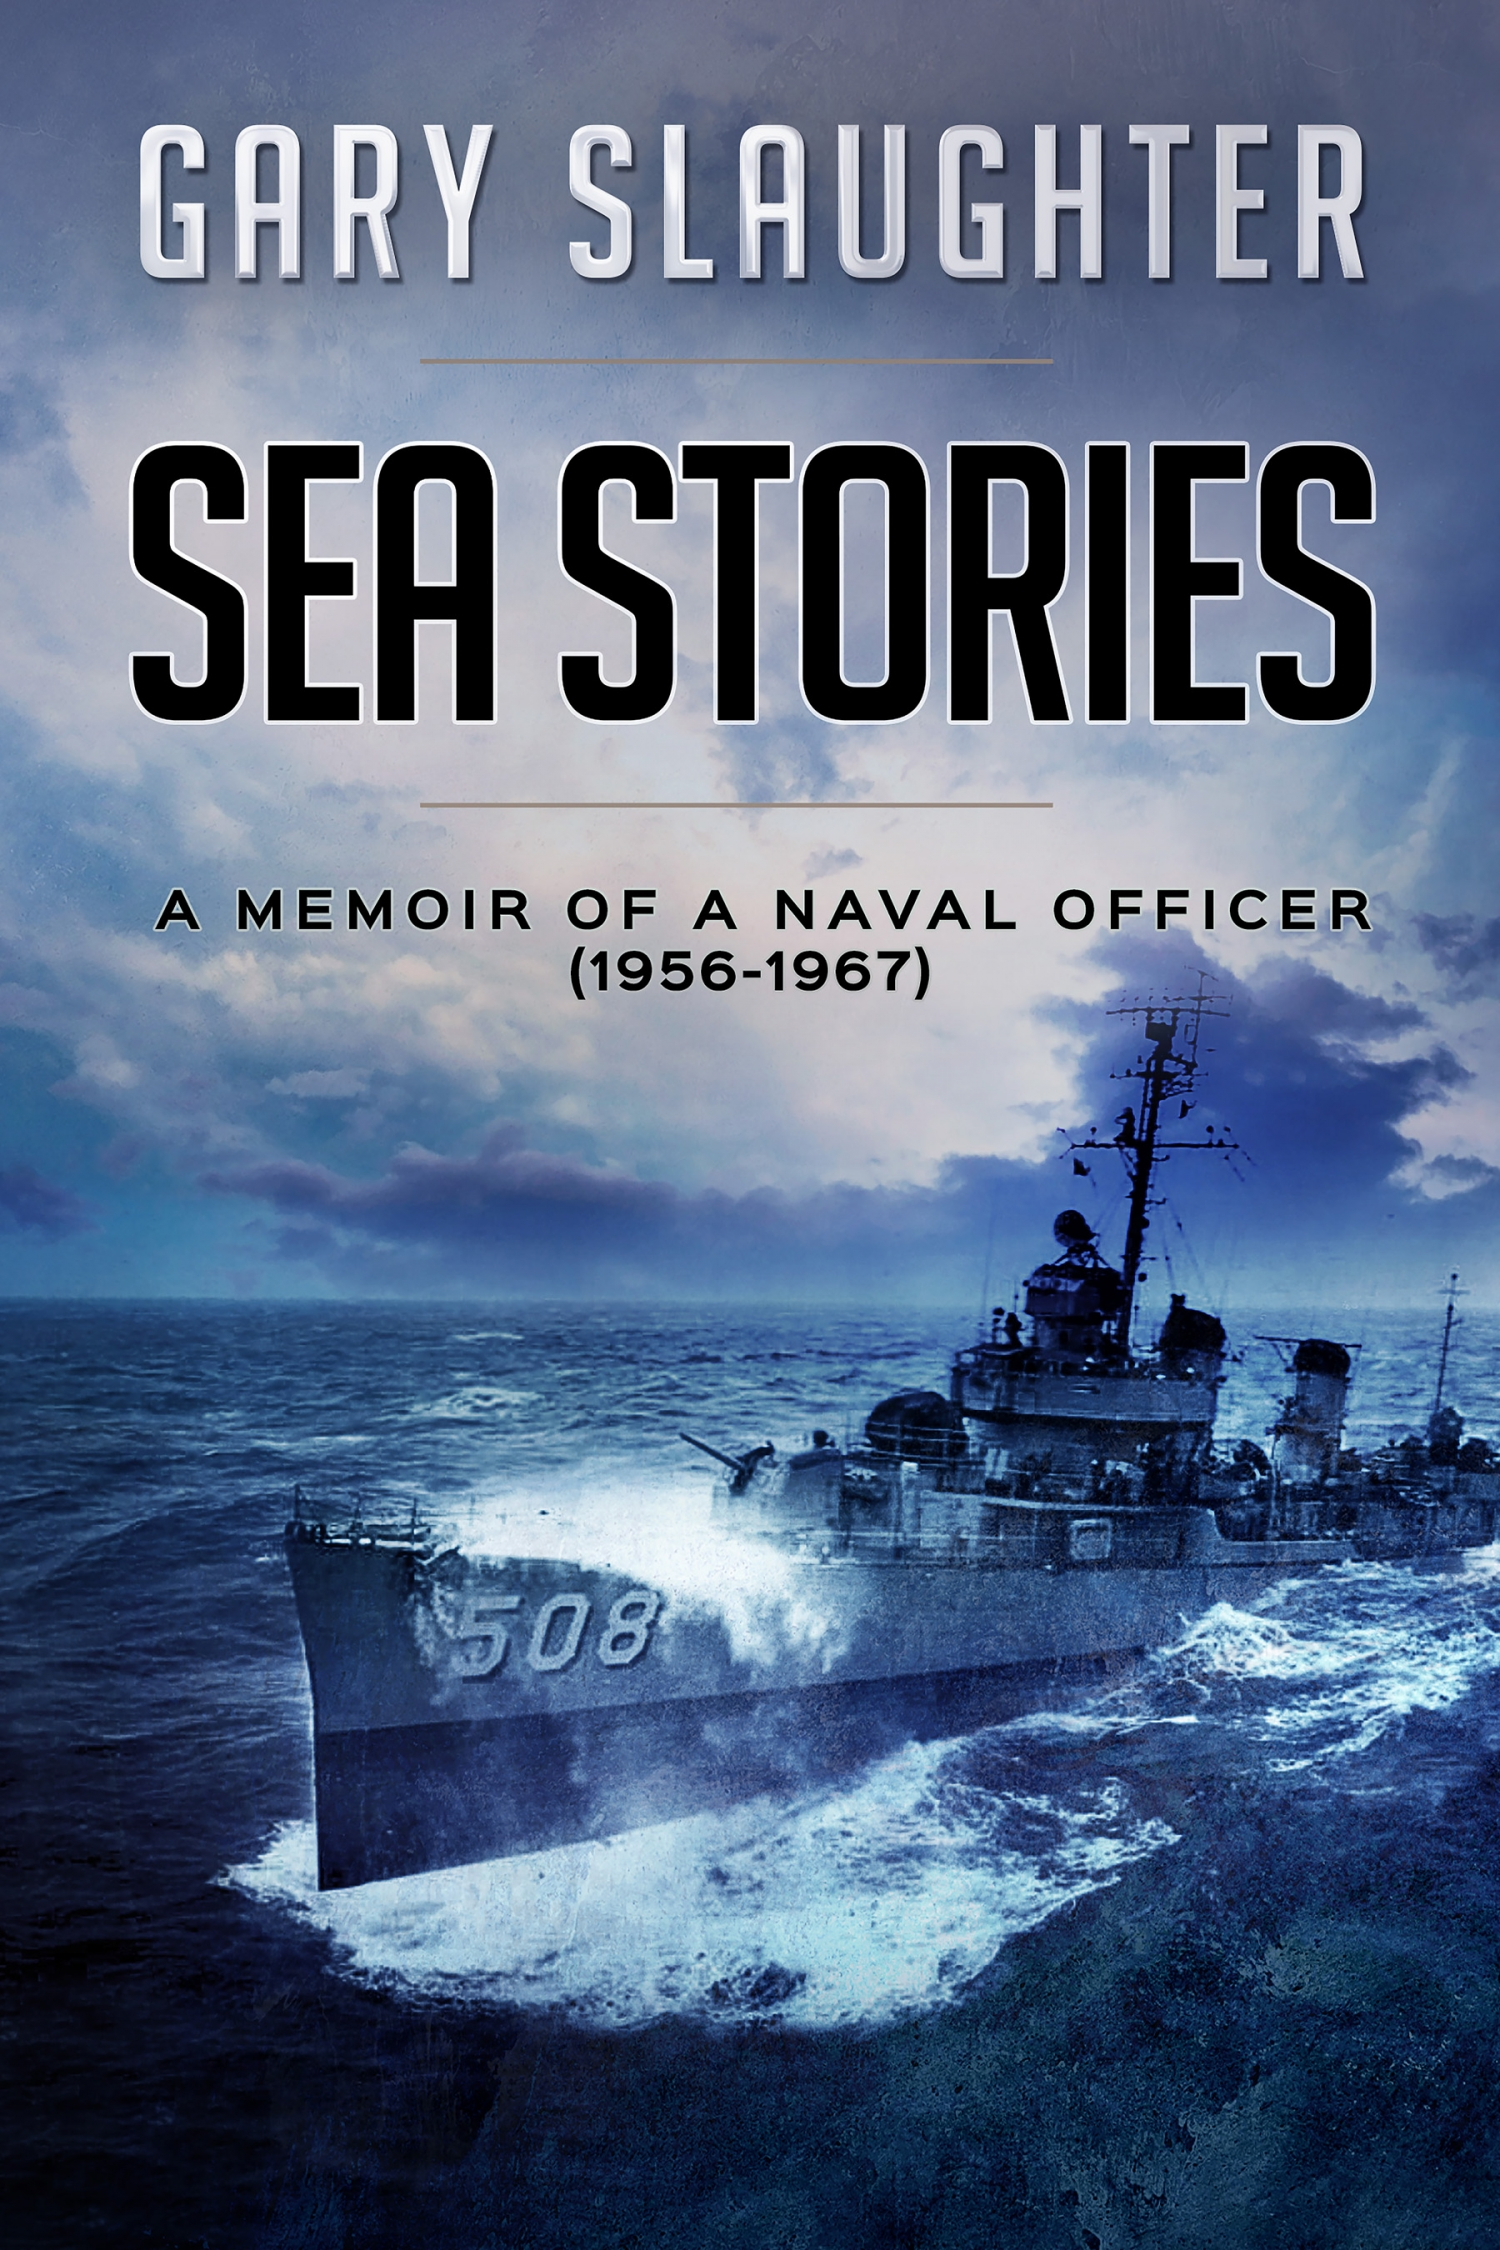 Sea stories. Stories of the Sea. Море мемуары. Гари море. Море мемуары картинка.